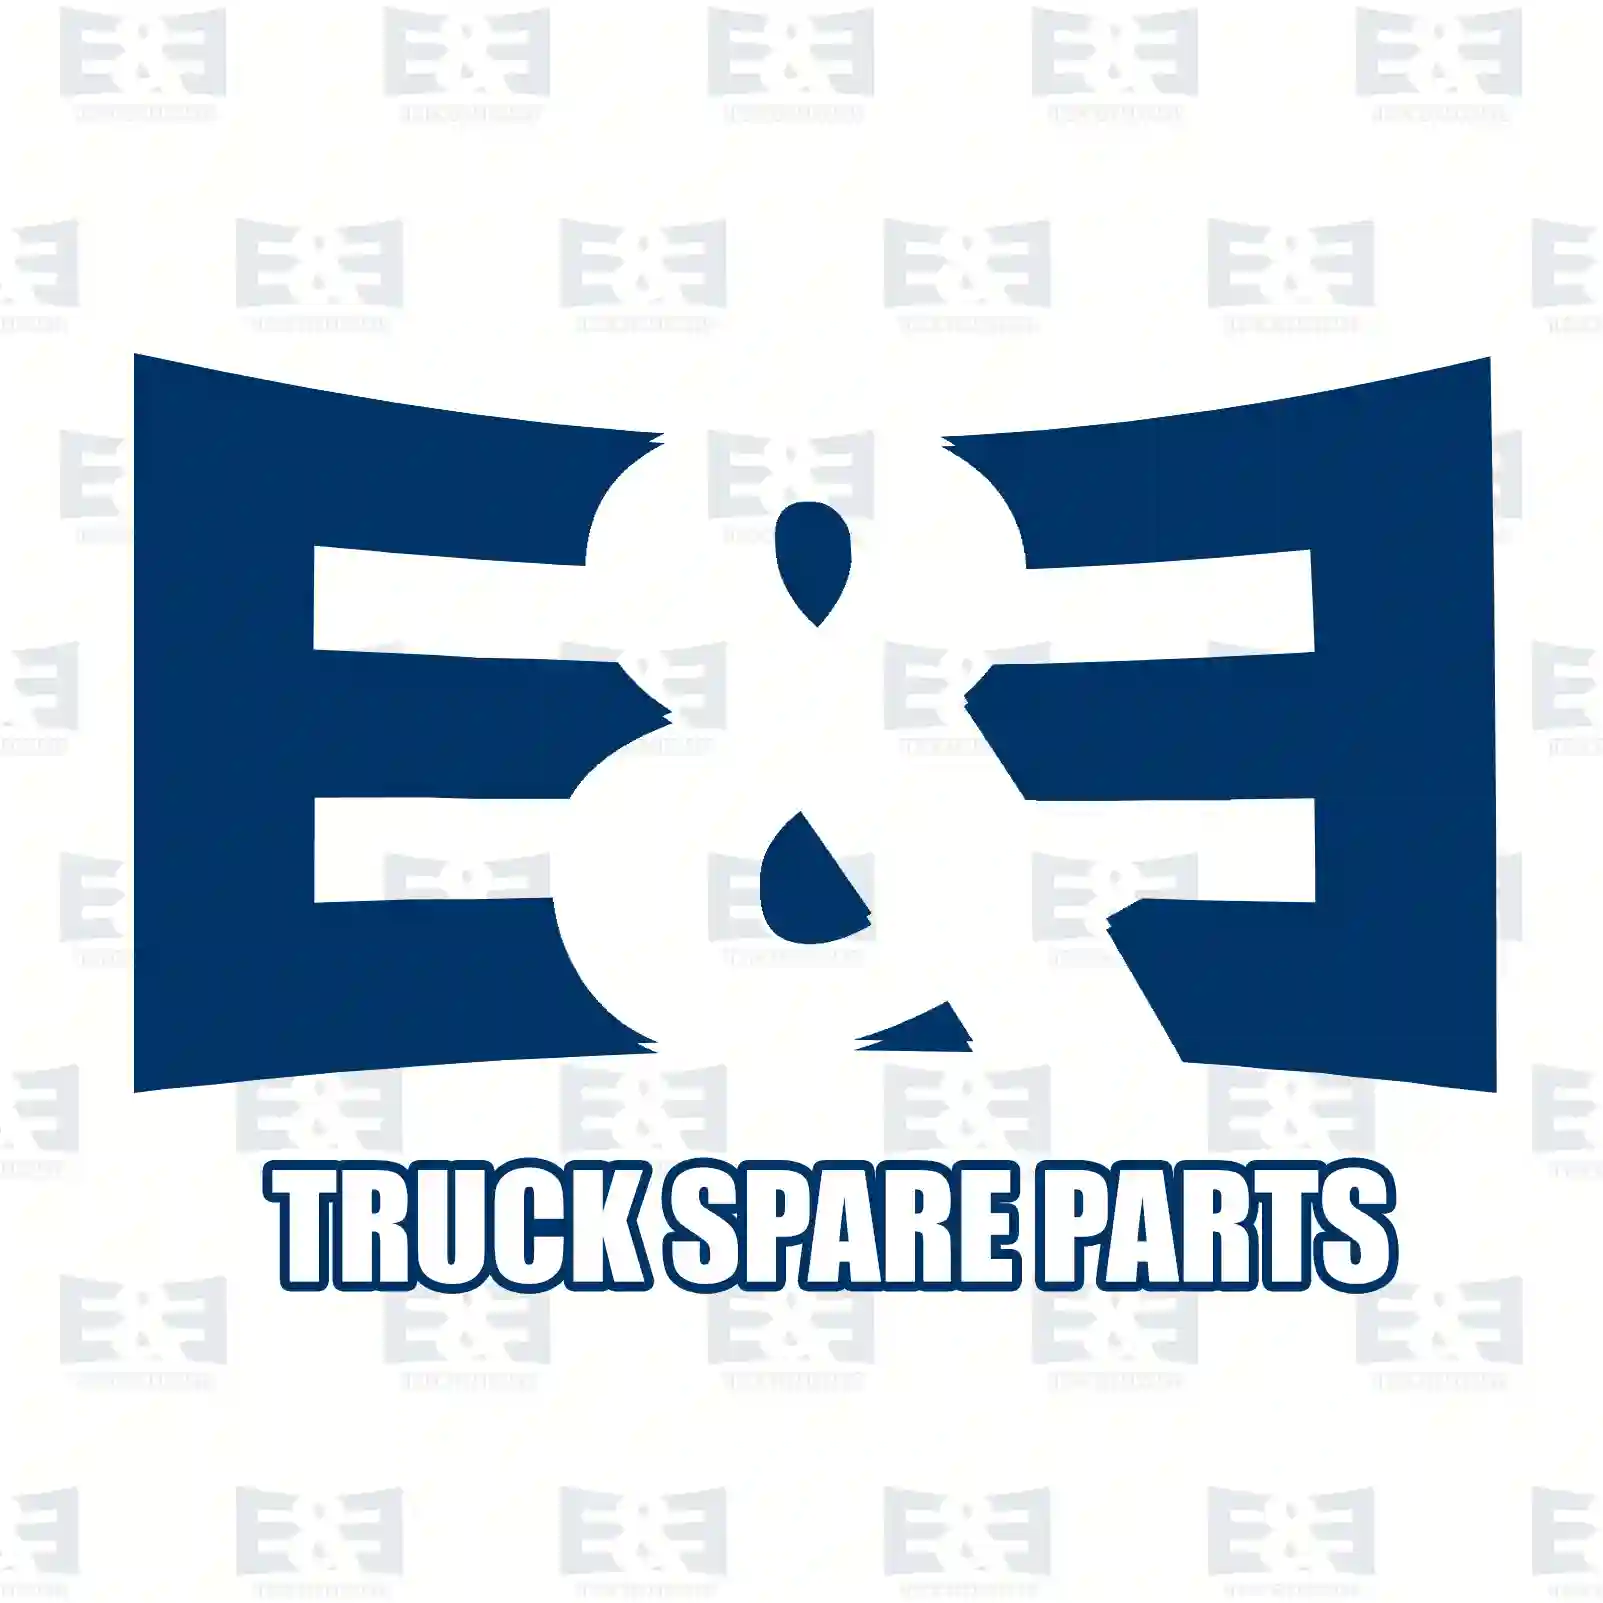 Engine mounting, front, left, 2E2207684, 5010460294, , , , , , ||  2E2207684 E&E Truck Spare Parts | Truck Spare Parts, Auotomotive Spare Parts Engine mounting, front, left, 2E2207684, 5010460294, , , , , , ||  2E2207684 E&E Truck Spare Parts | Truck Spare Parts, Auotomotive Spare Parts